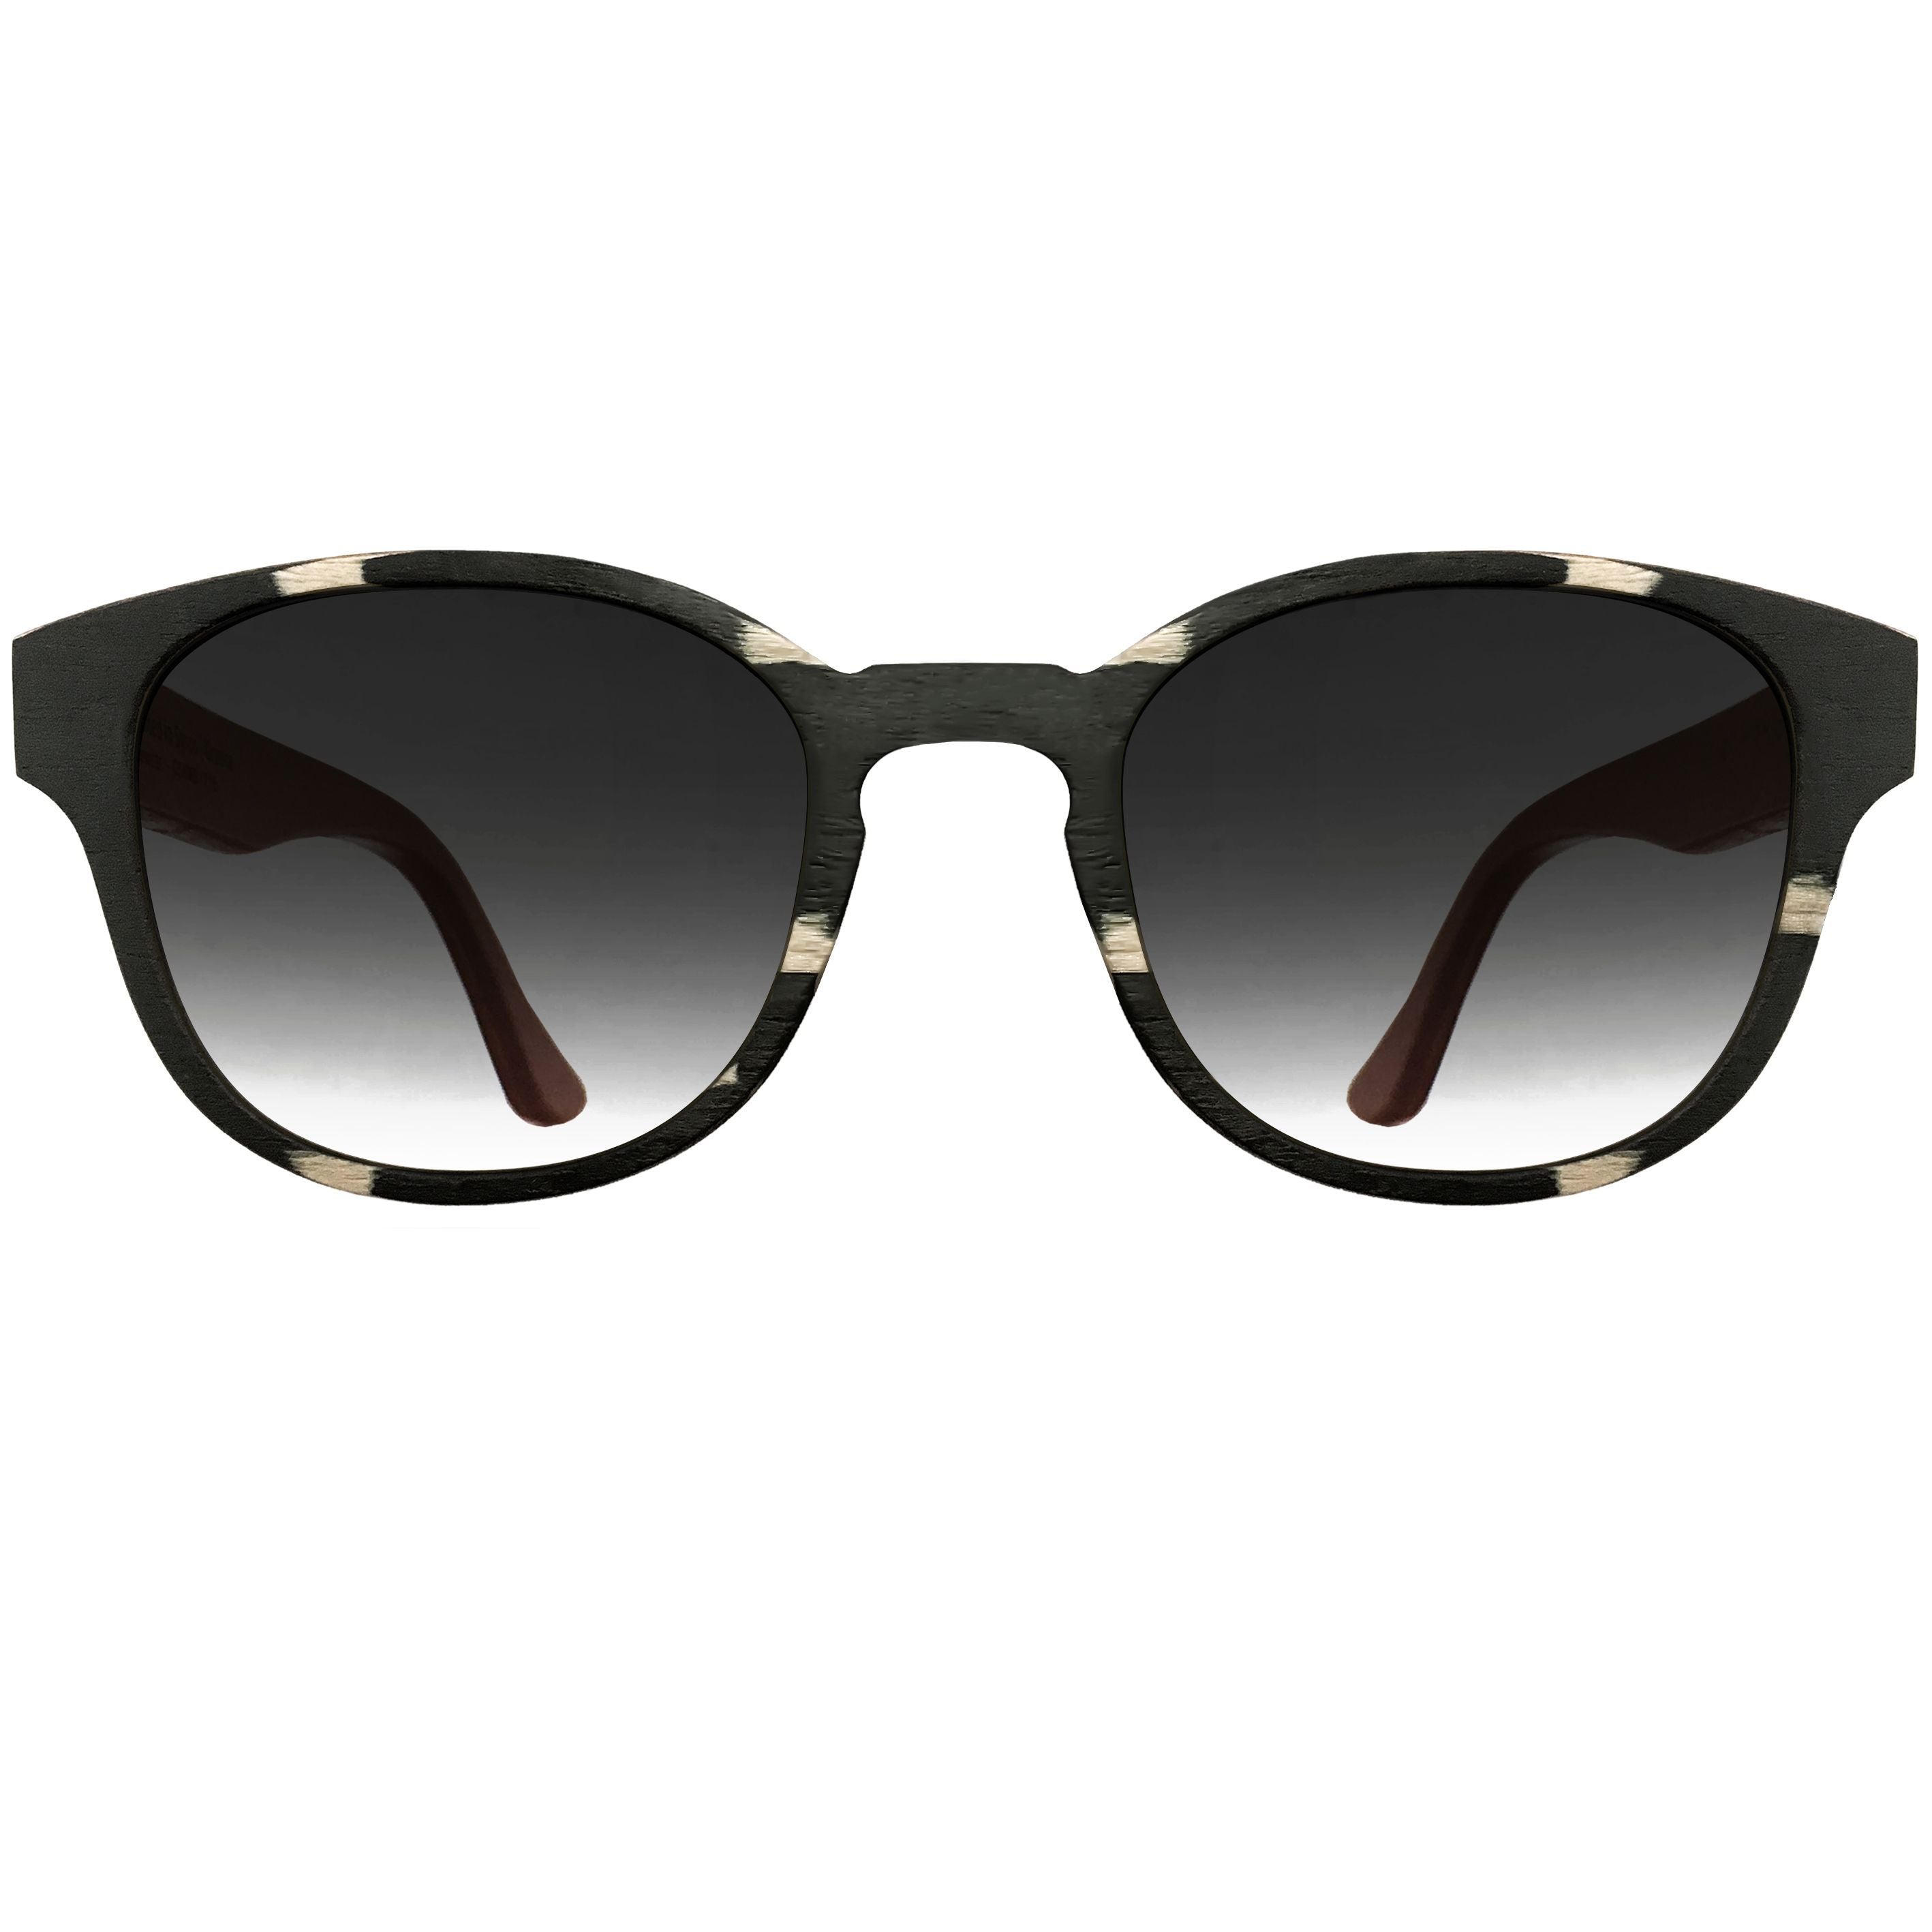 Zylo PEBBLES BLACK BEIGE sunglasses